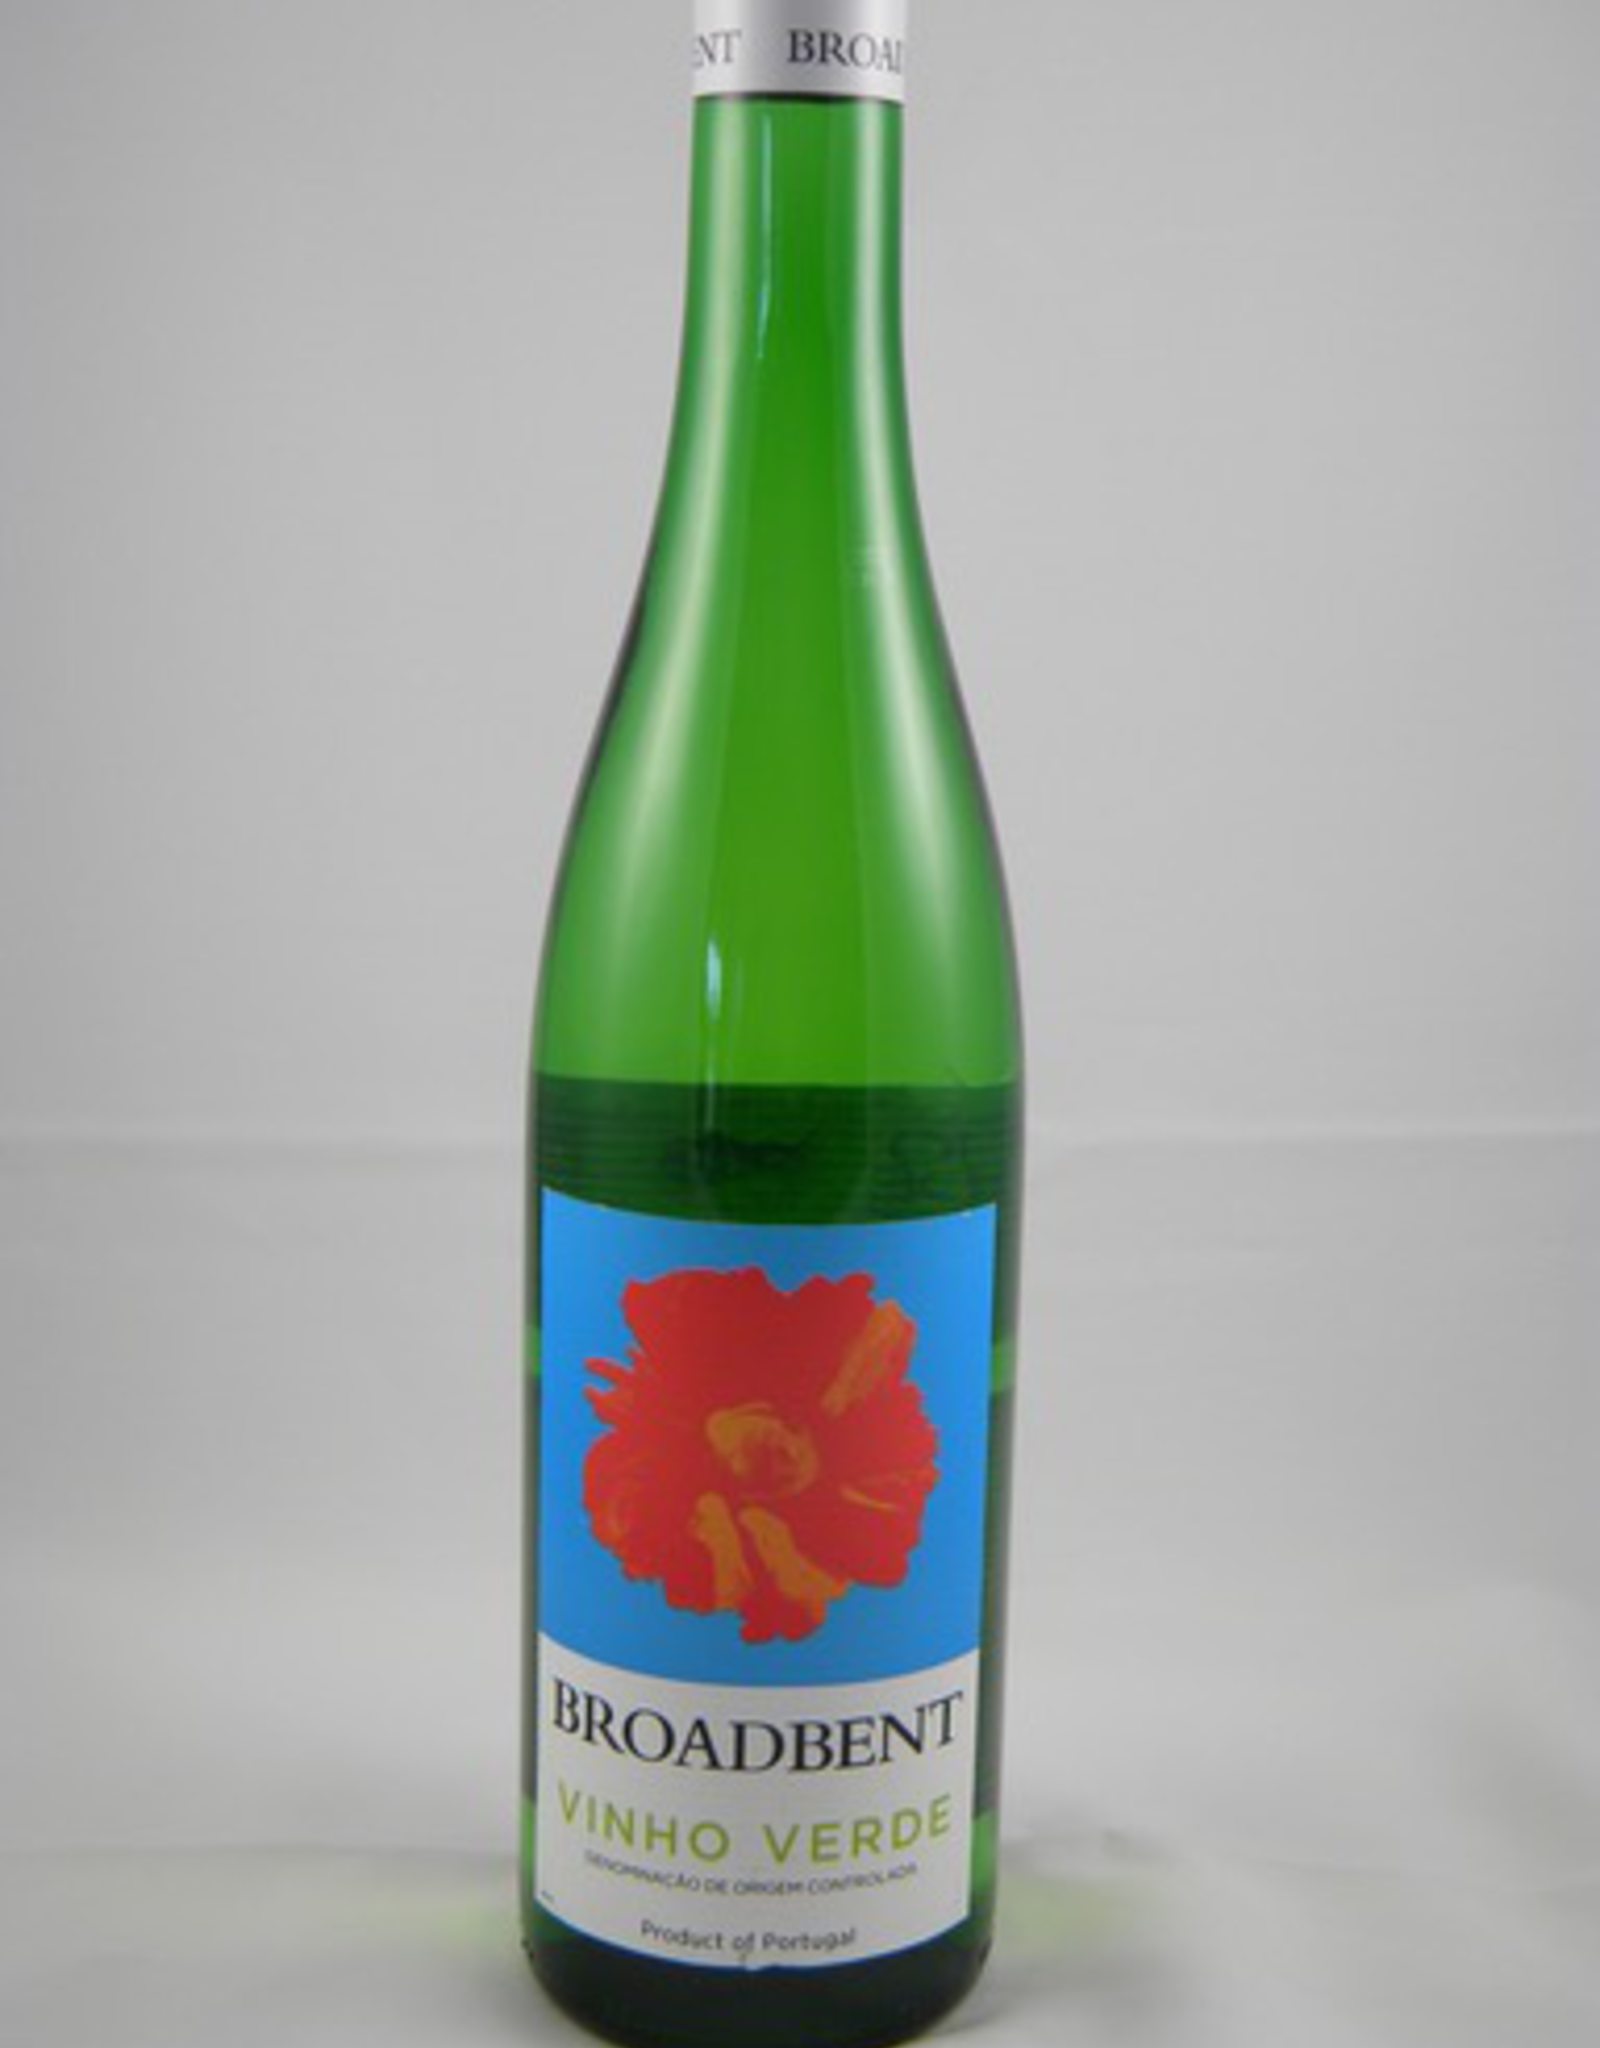 Broadbent Broadbent Vinho Verde NV